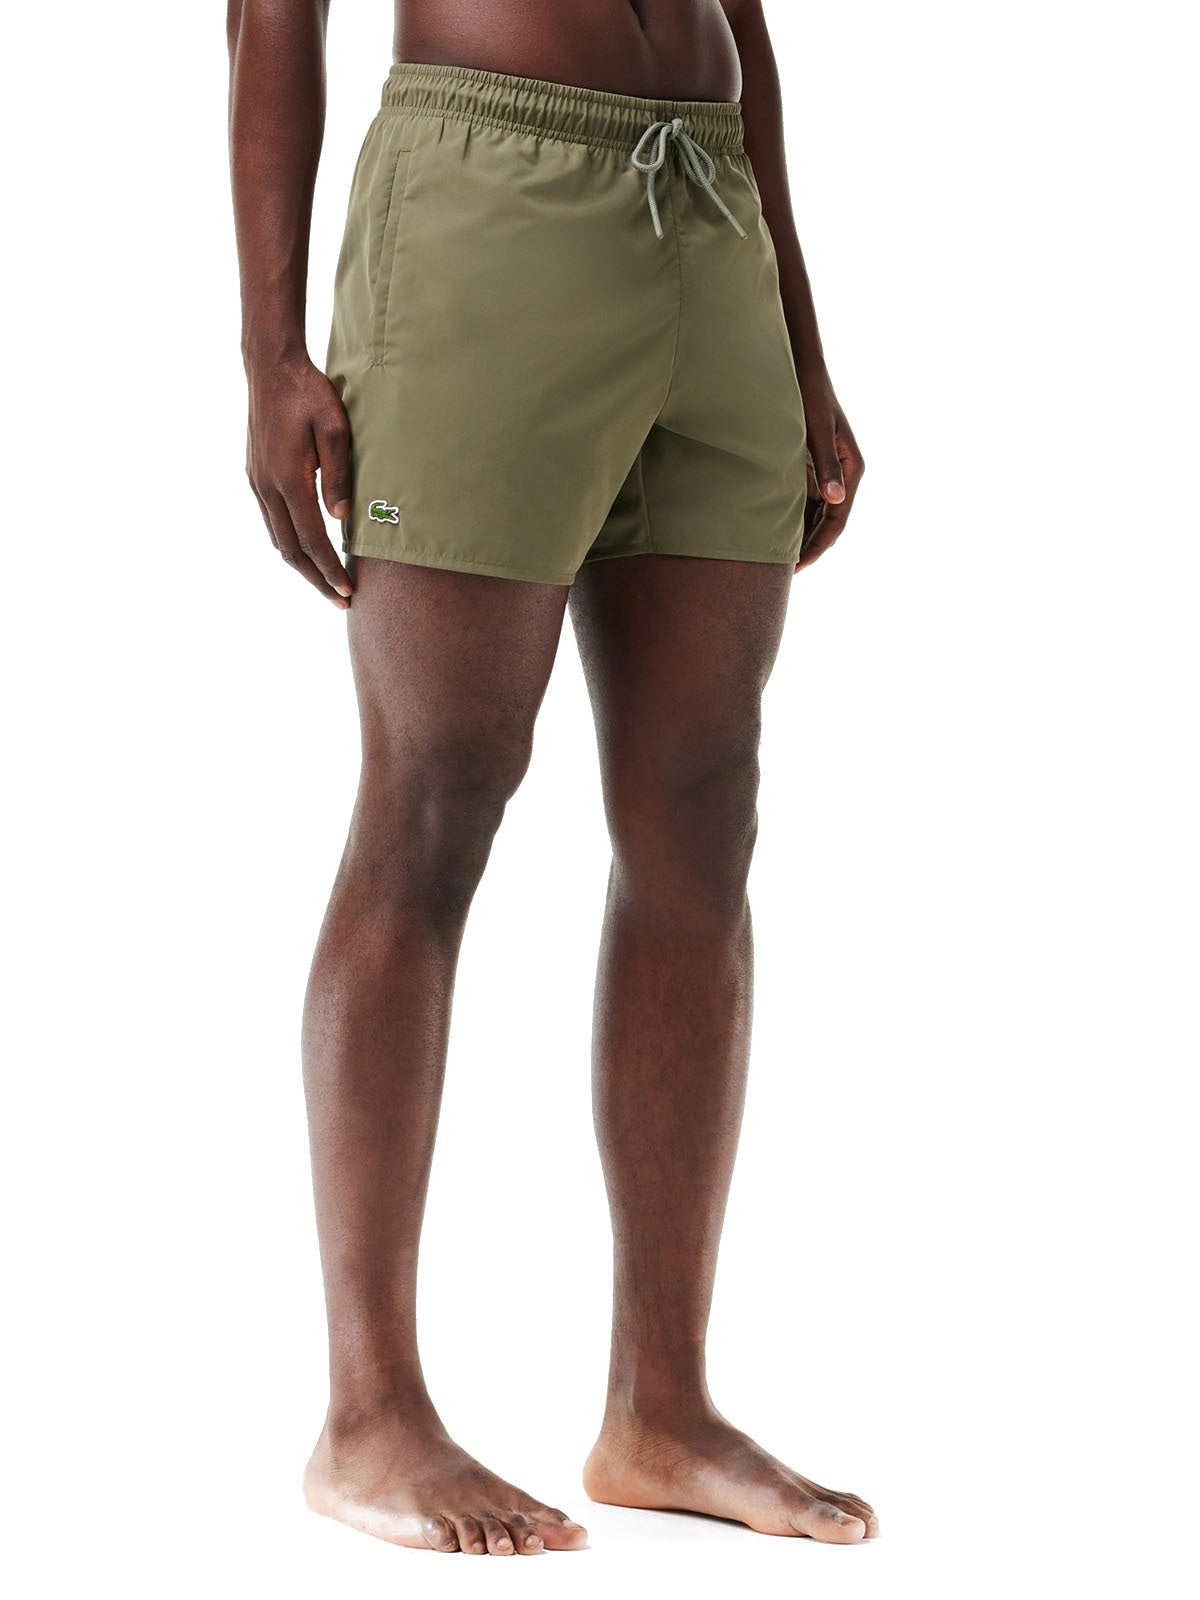 Pantaloncini e calzoncini Uomo Lacoste - Costume Ad Asciugatura Rapida Leggero - Verde